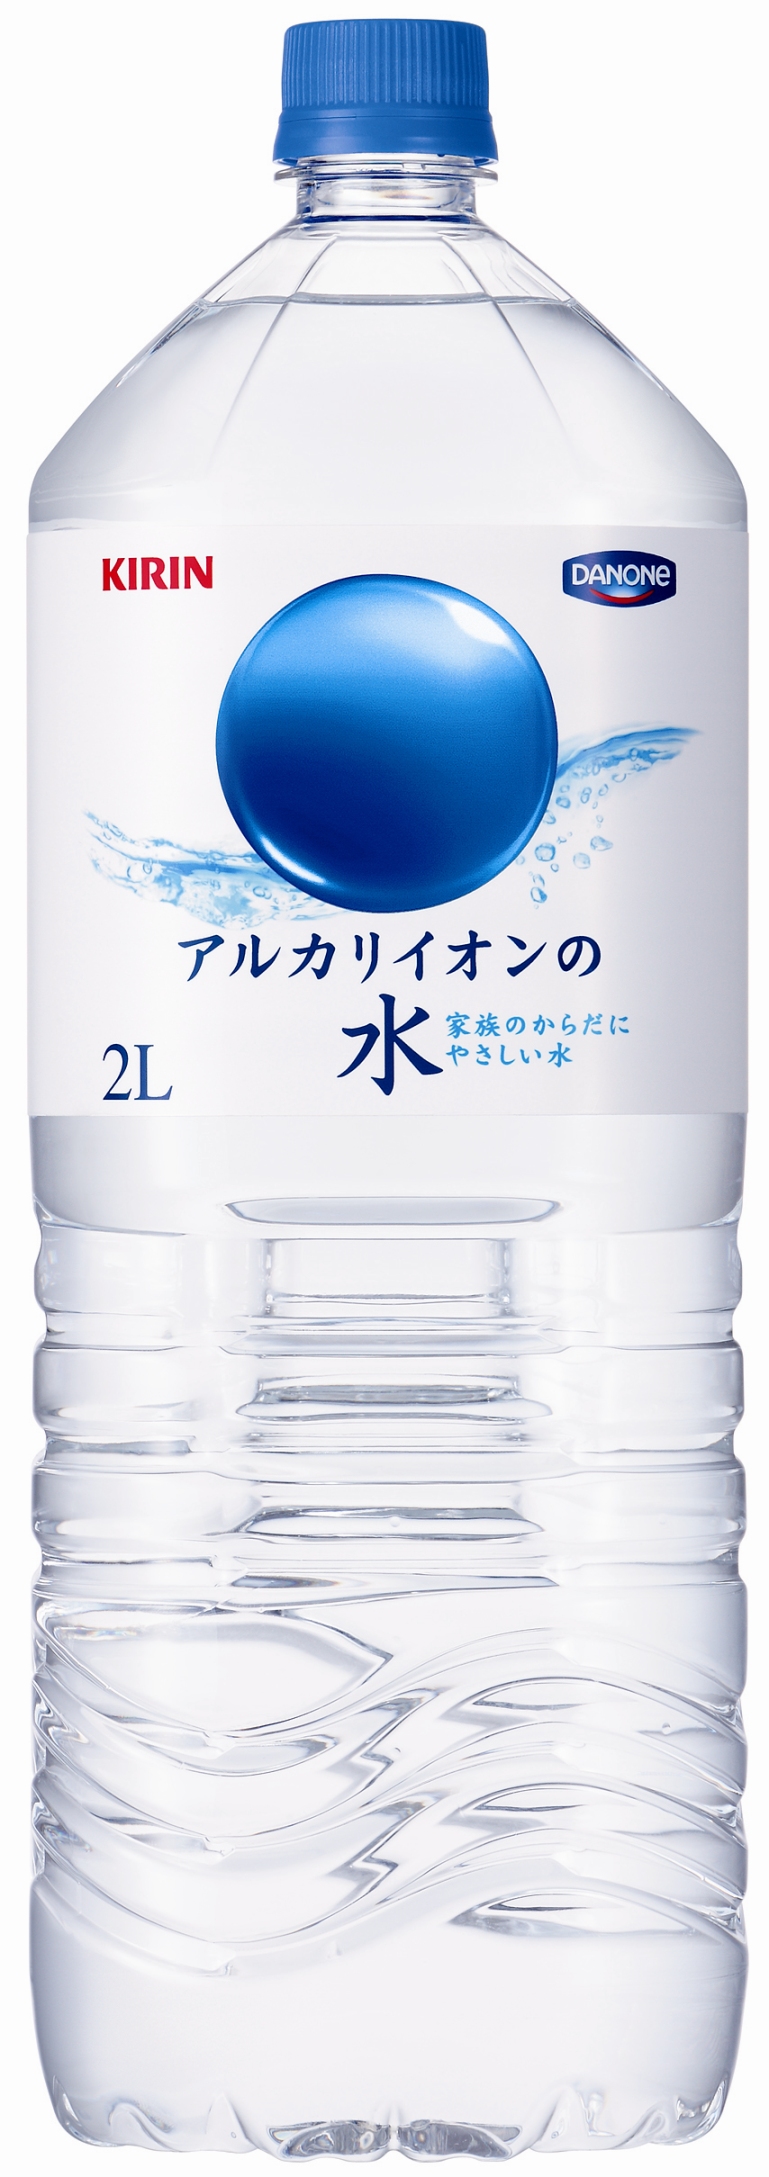 Kirin Japan bottle